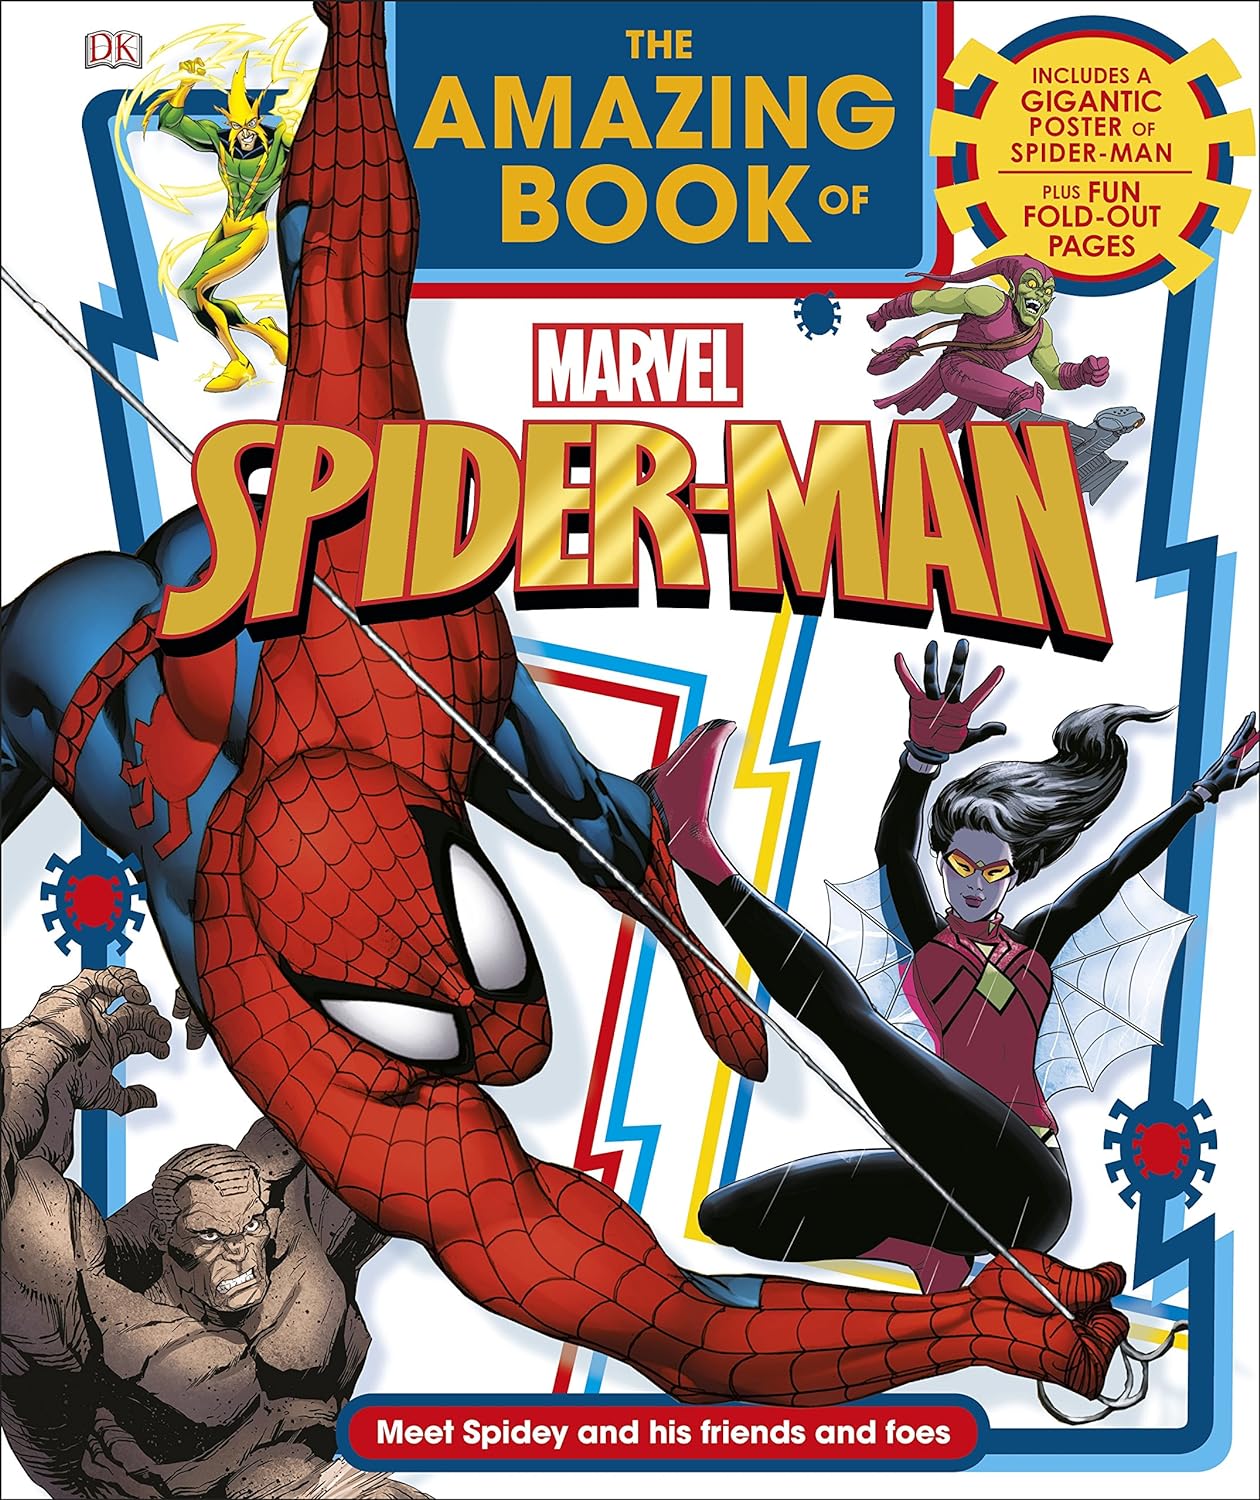 Amazing Book of Marvel Spider-Man